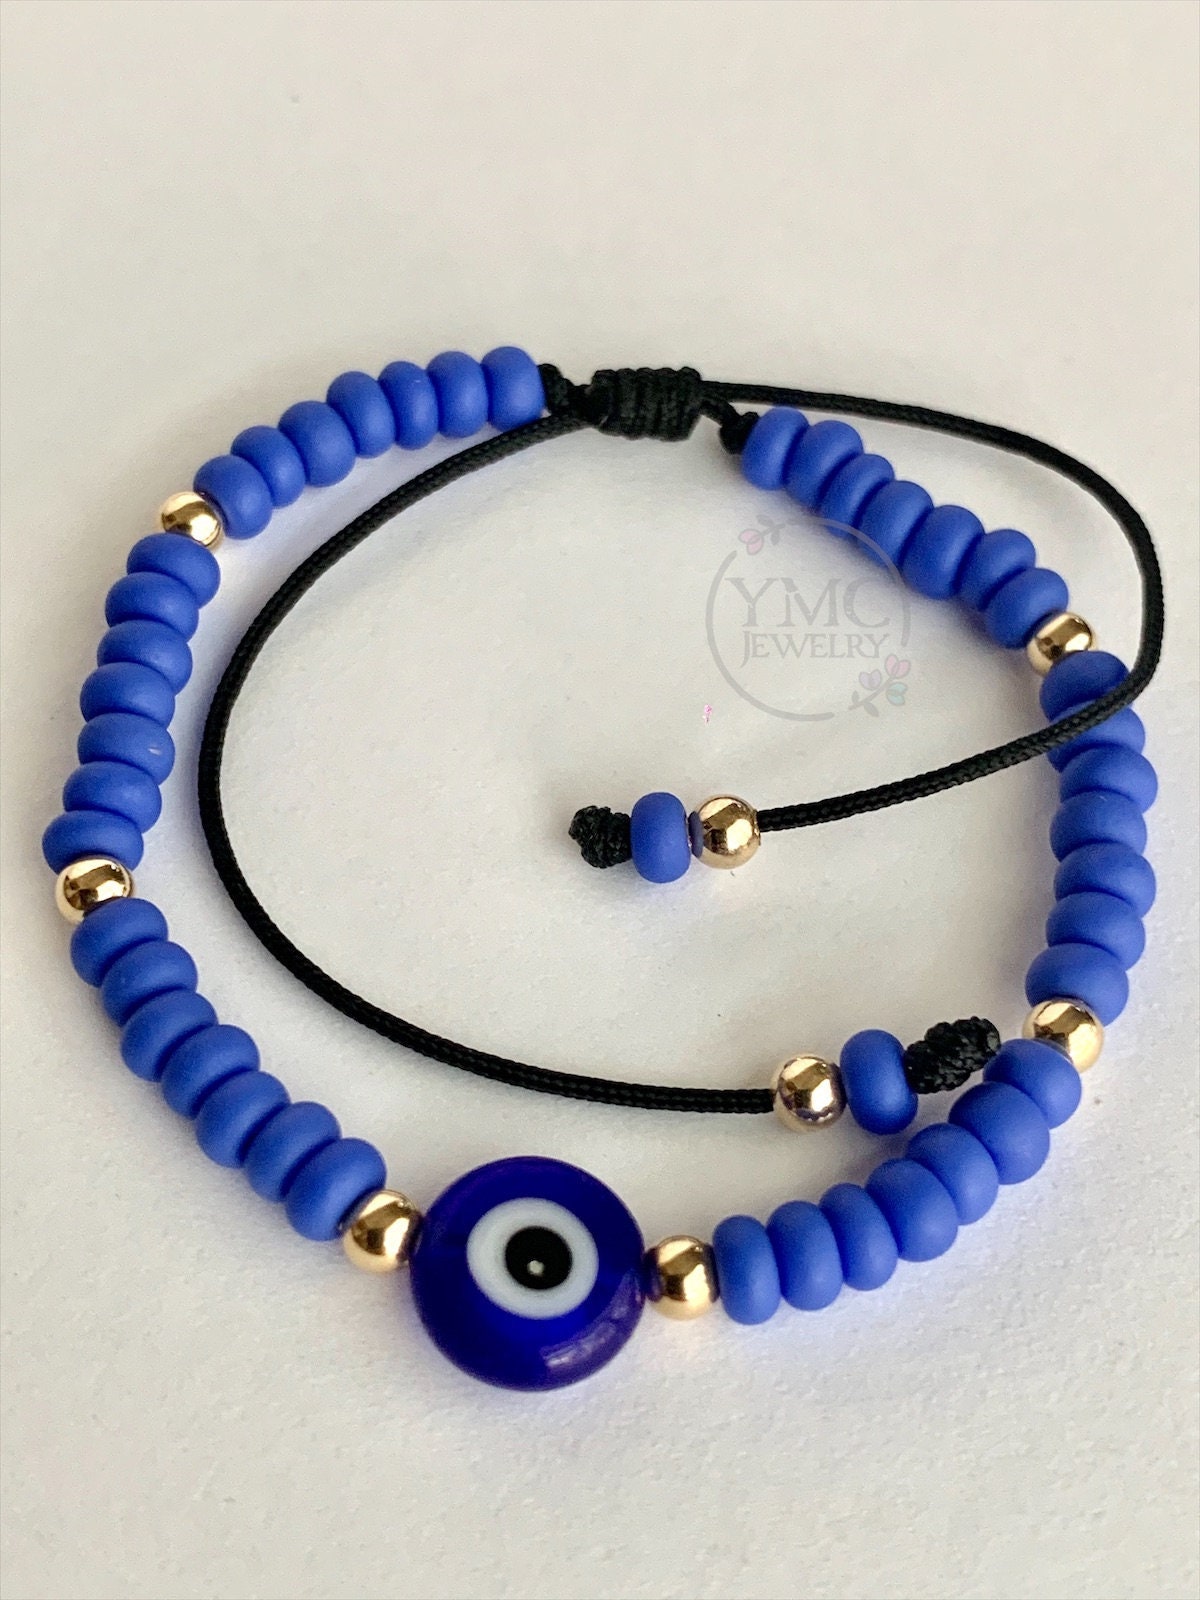 Blue Baby Evil Eye Crystal Bracelet,Baby Protection Bracelet,Lucky Evil Eye Bracelet,Turkish Evil Eye Bracelet,Protection Bracelet